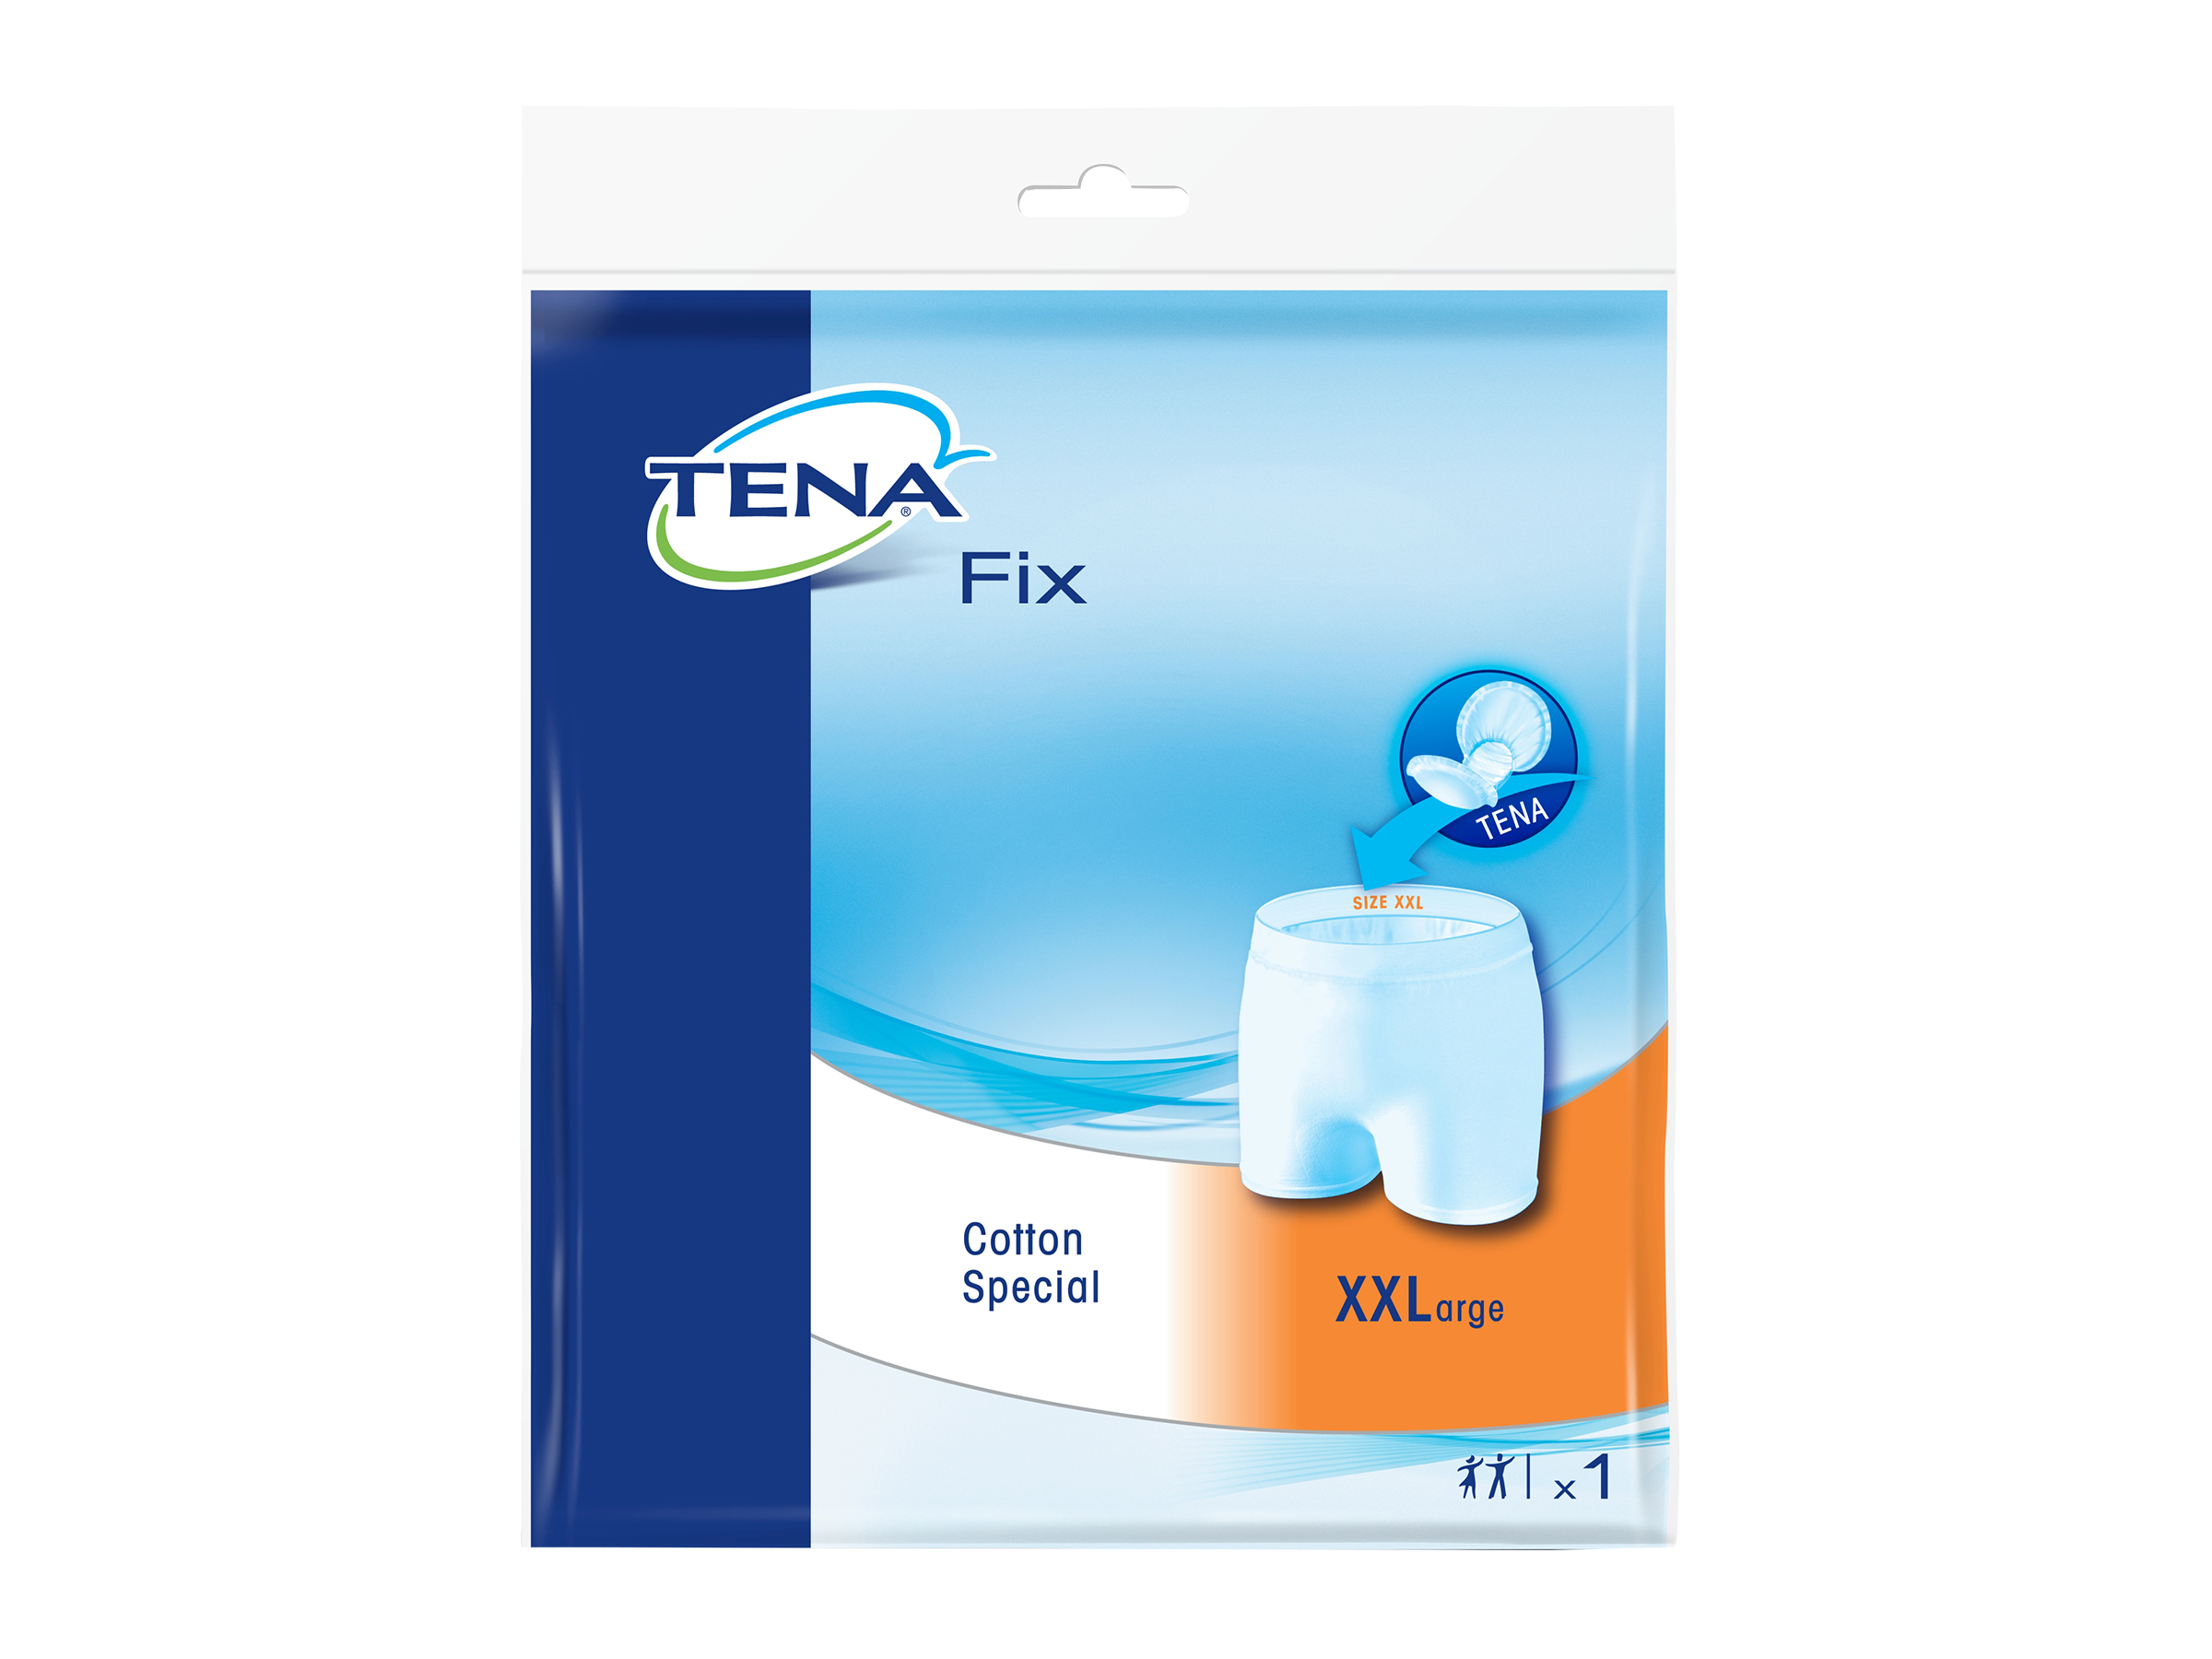 Tena Fix Cotton Special XXL, Størrelse XXL, 1 stk.